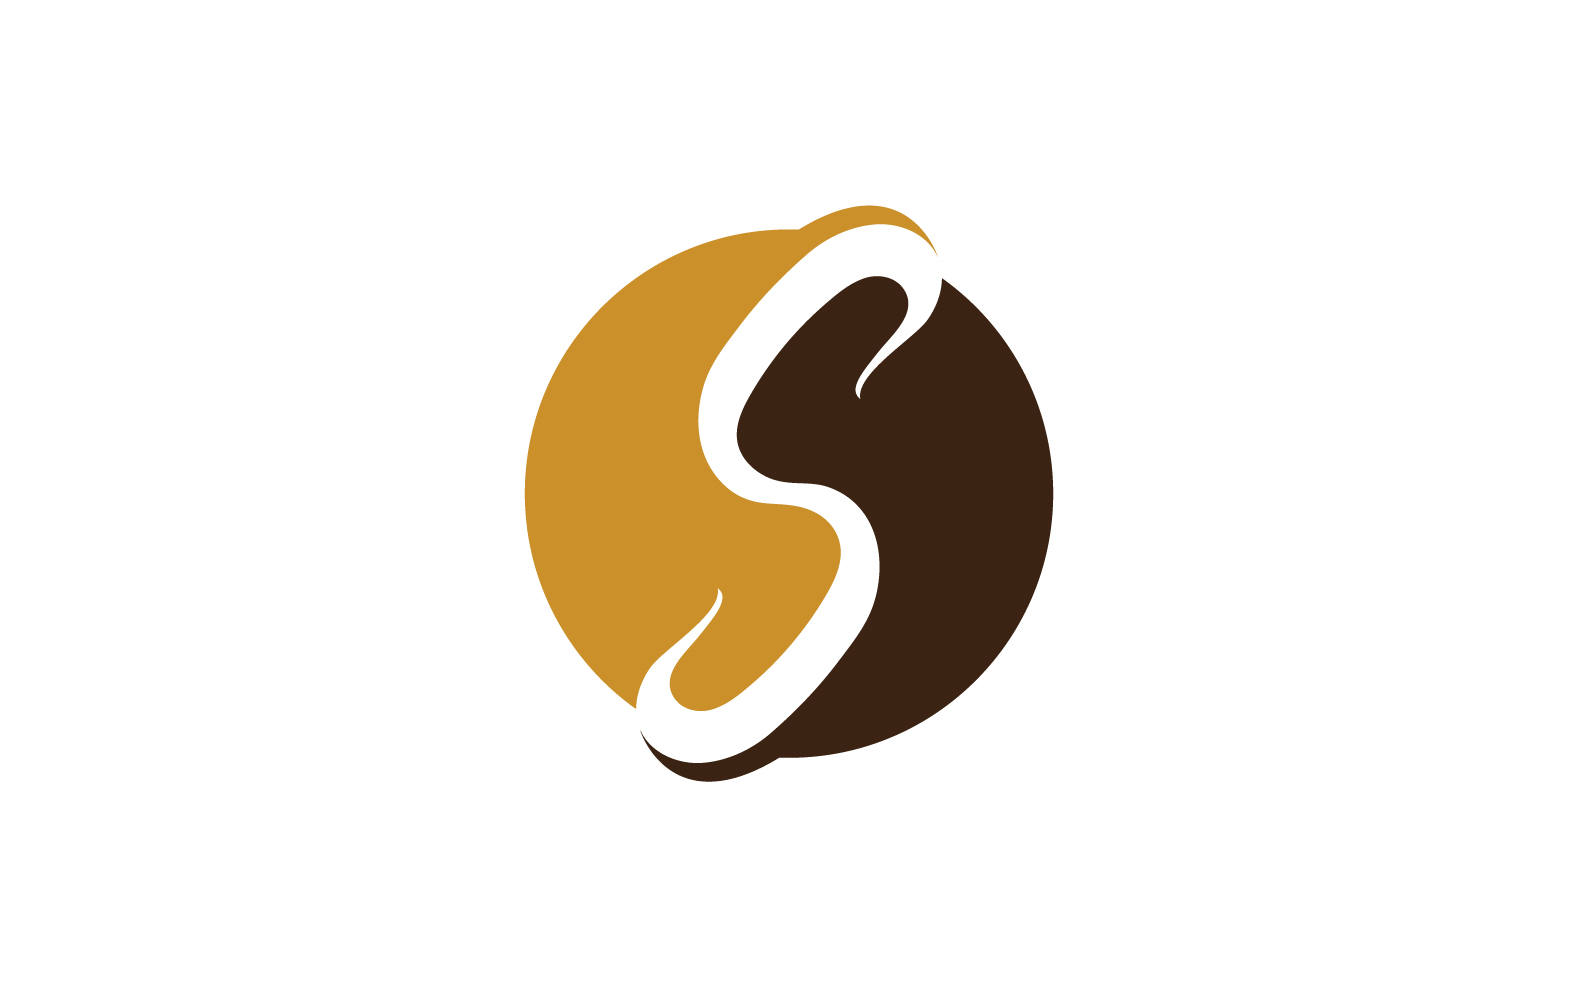 S letter icon logo vector design v21